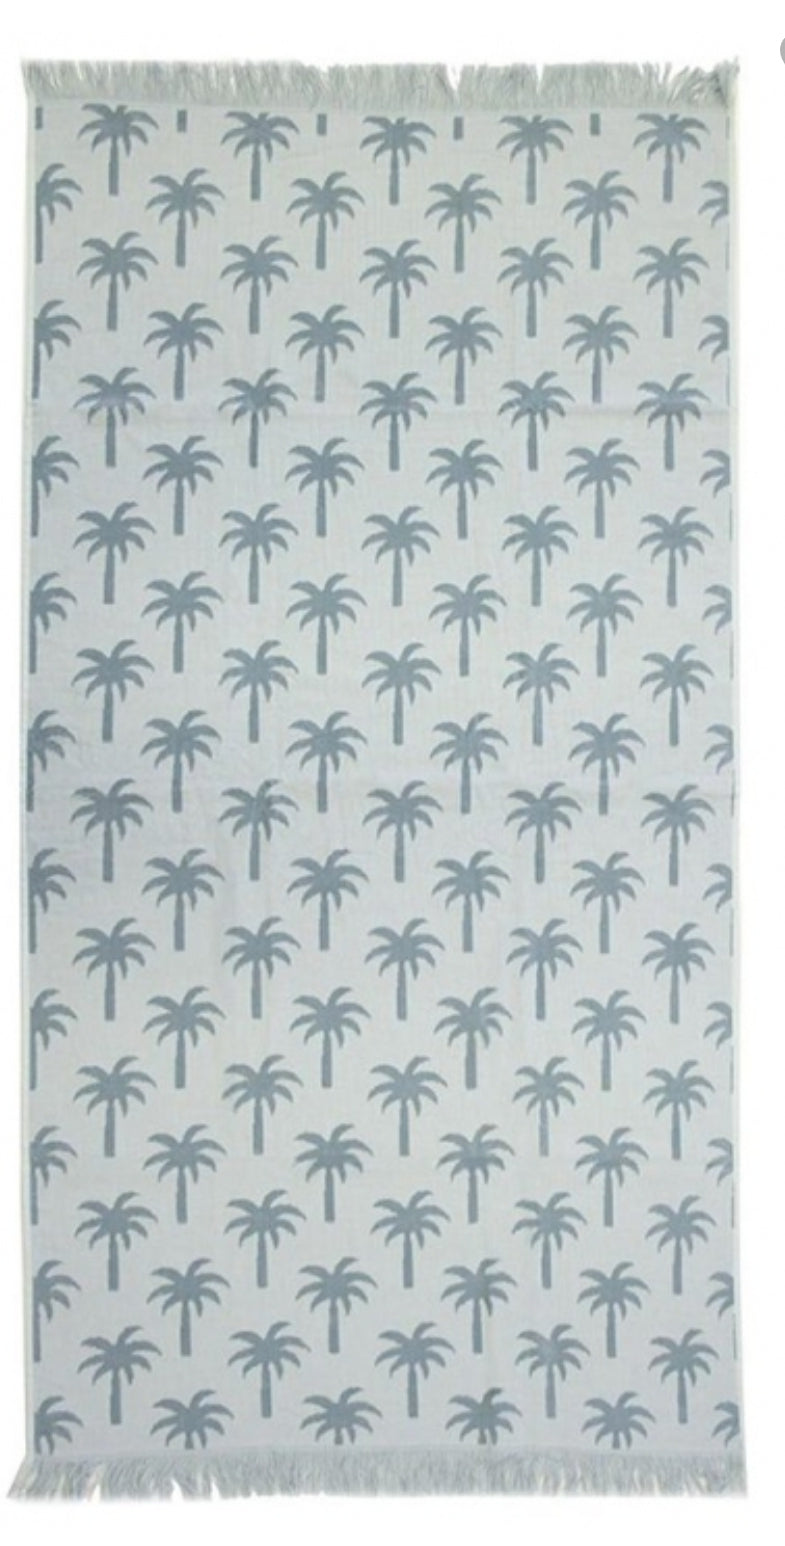 Palm Beach Towel Seafoam Green - Coastalfunk